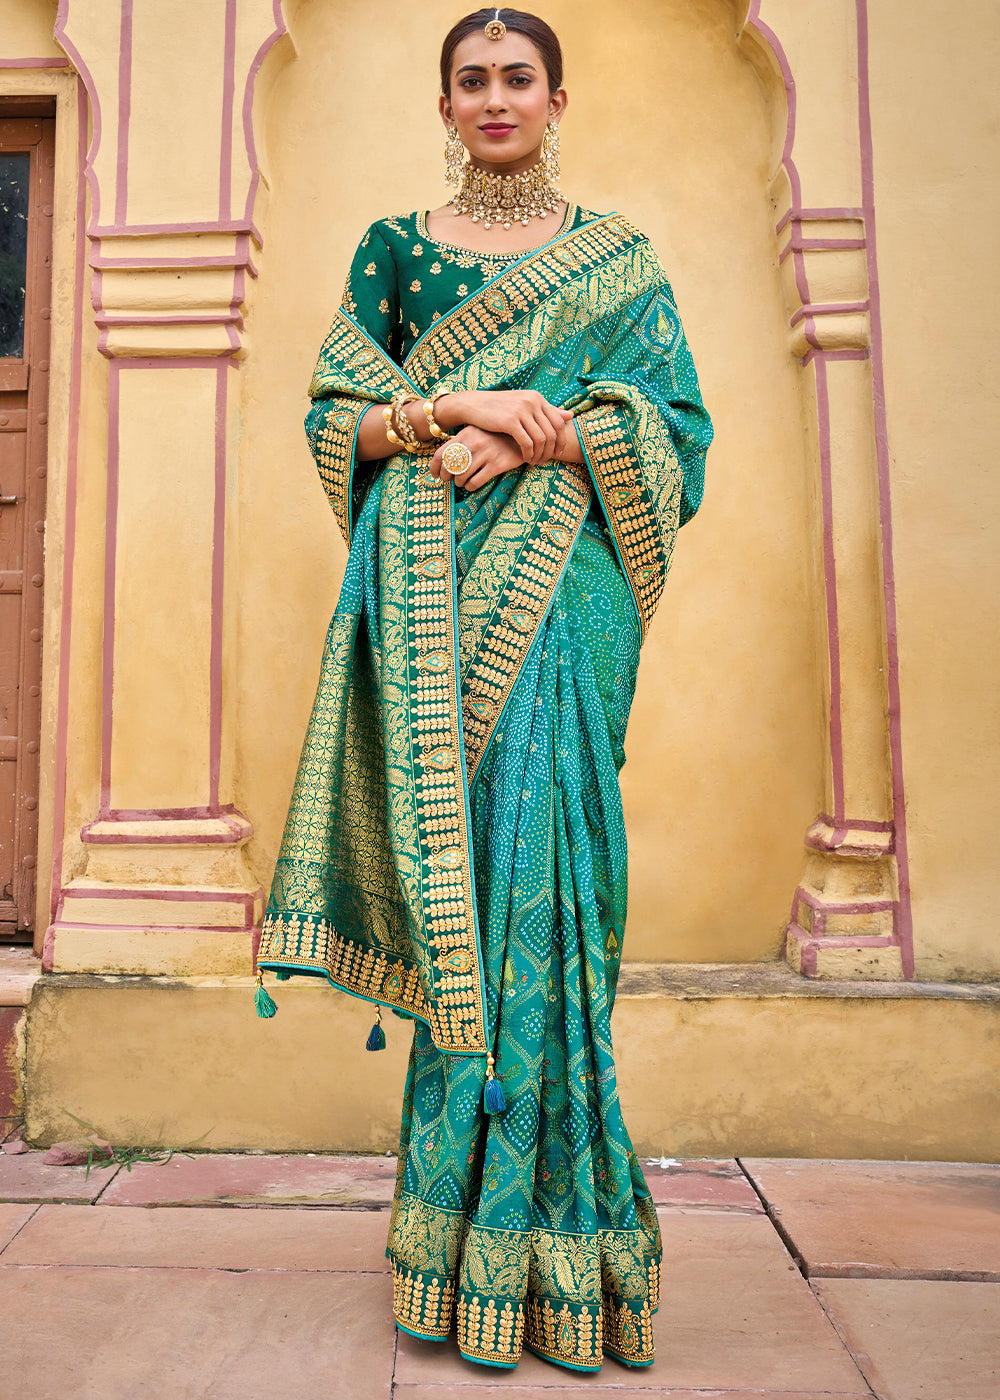 Cerulean Blue Dola Silk Saree with Beautiful Embroidery work: Wedding Edition